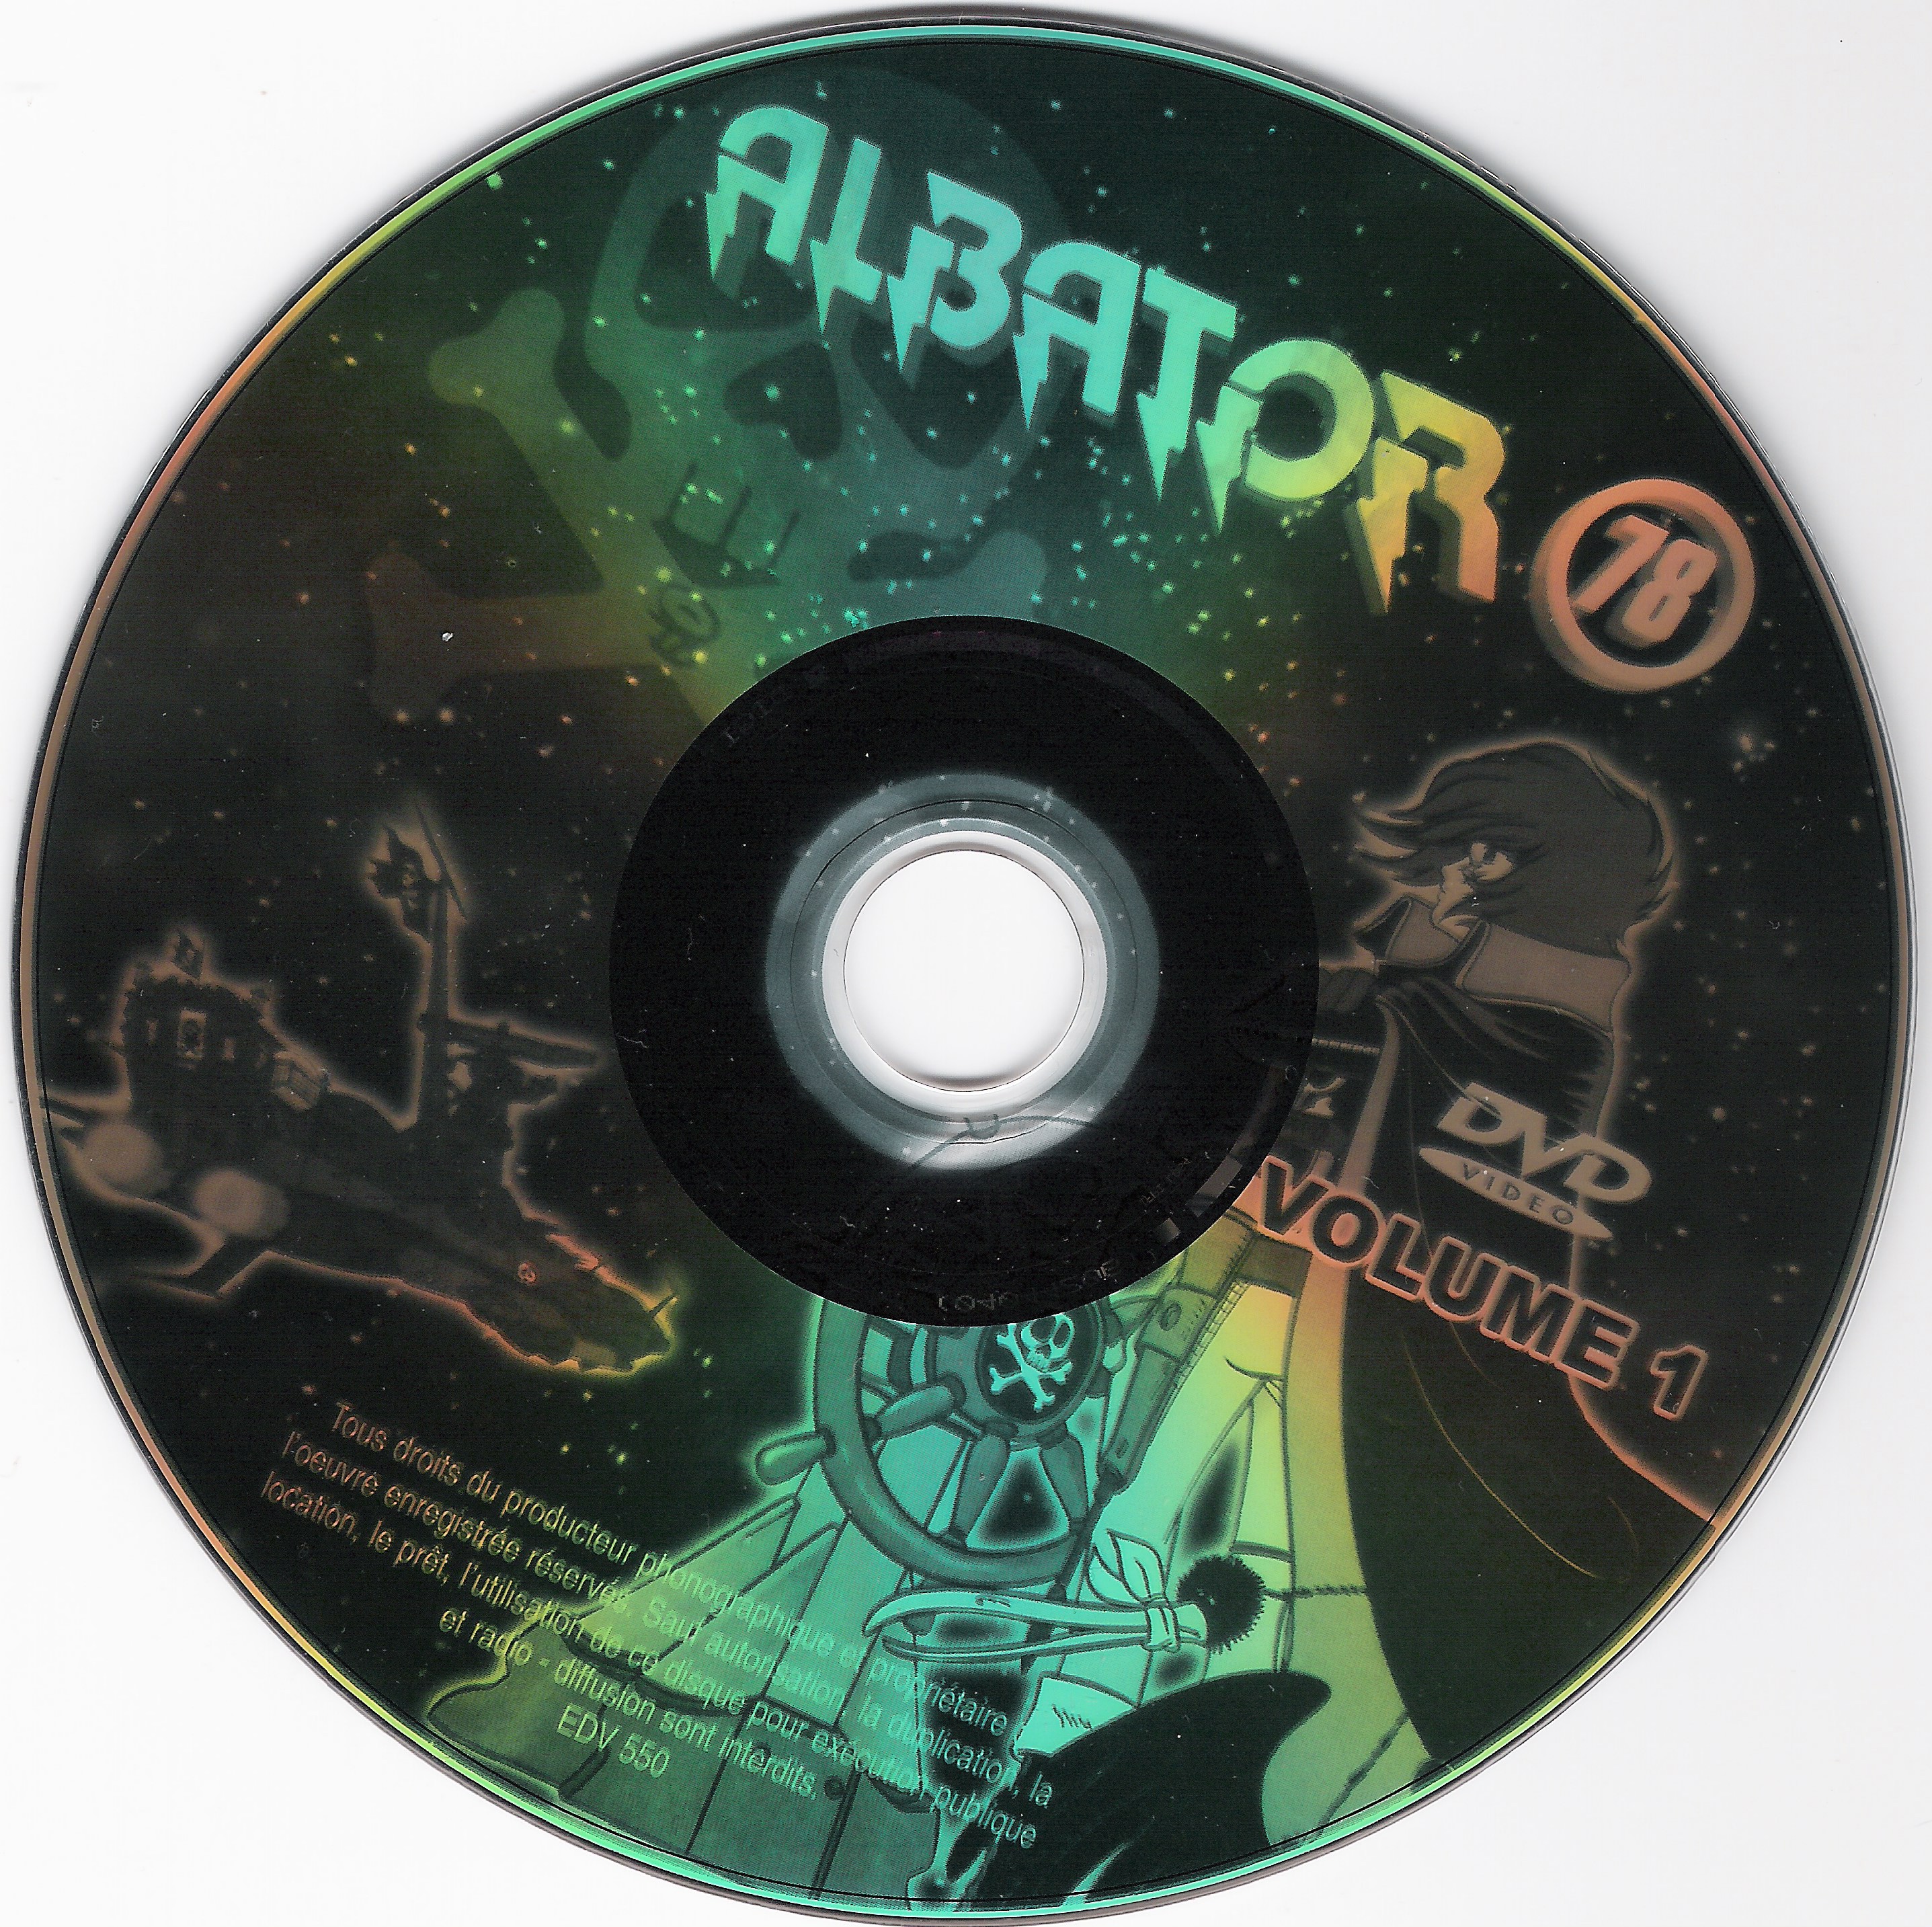 Albator 78 vol 1 (GENERATION DVD)